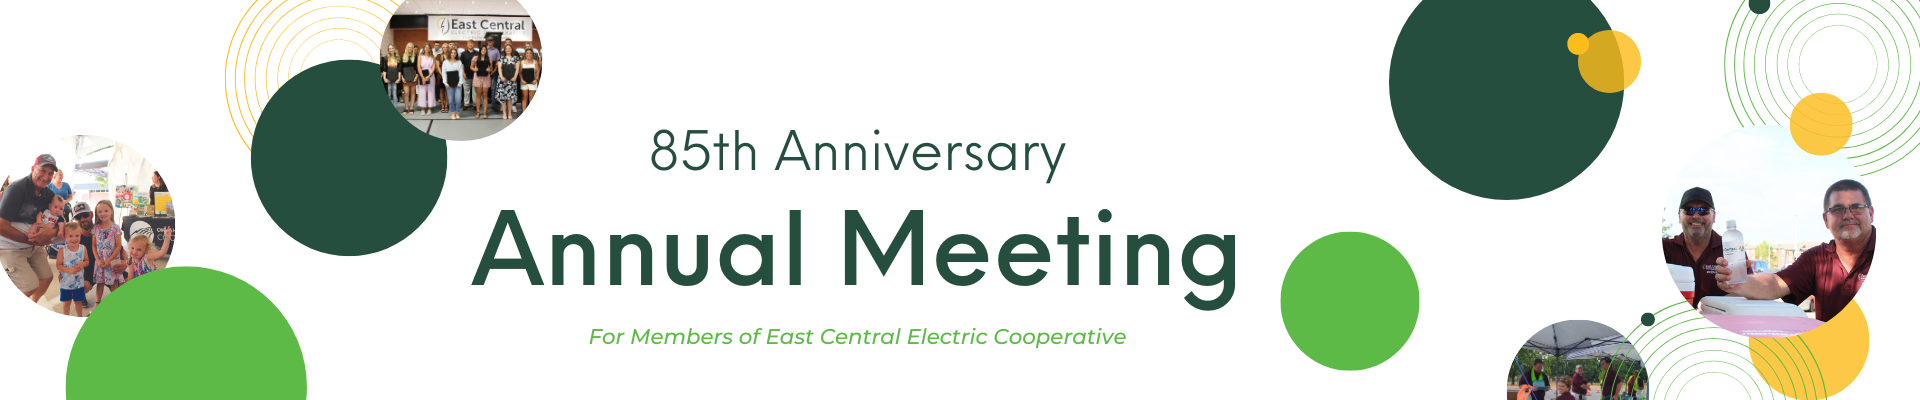 85th Anniversary Annual Meeting